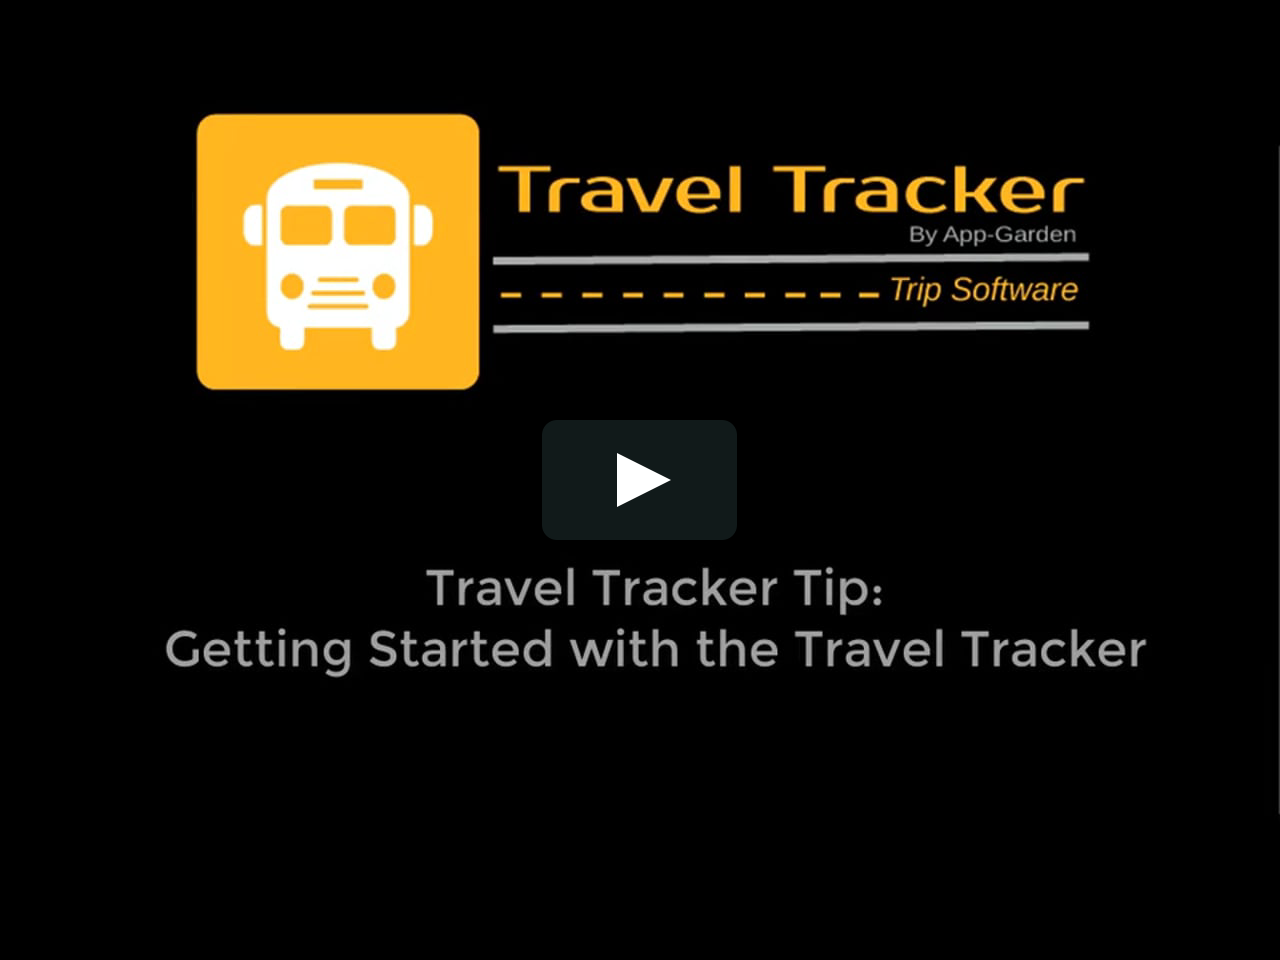 travel tracker login isos